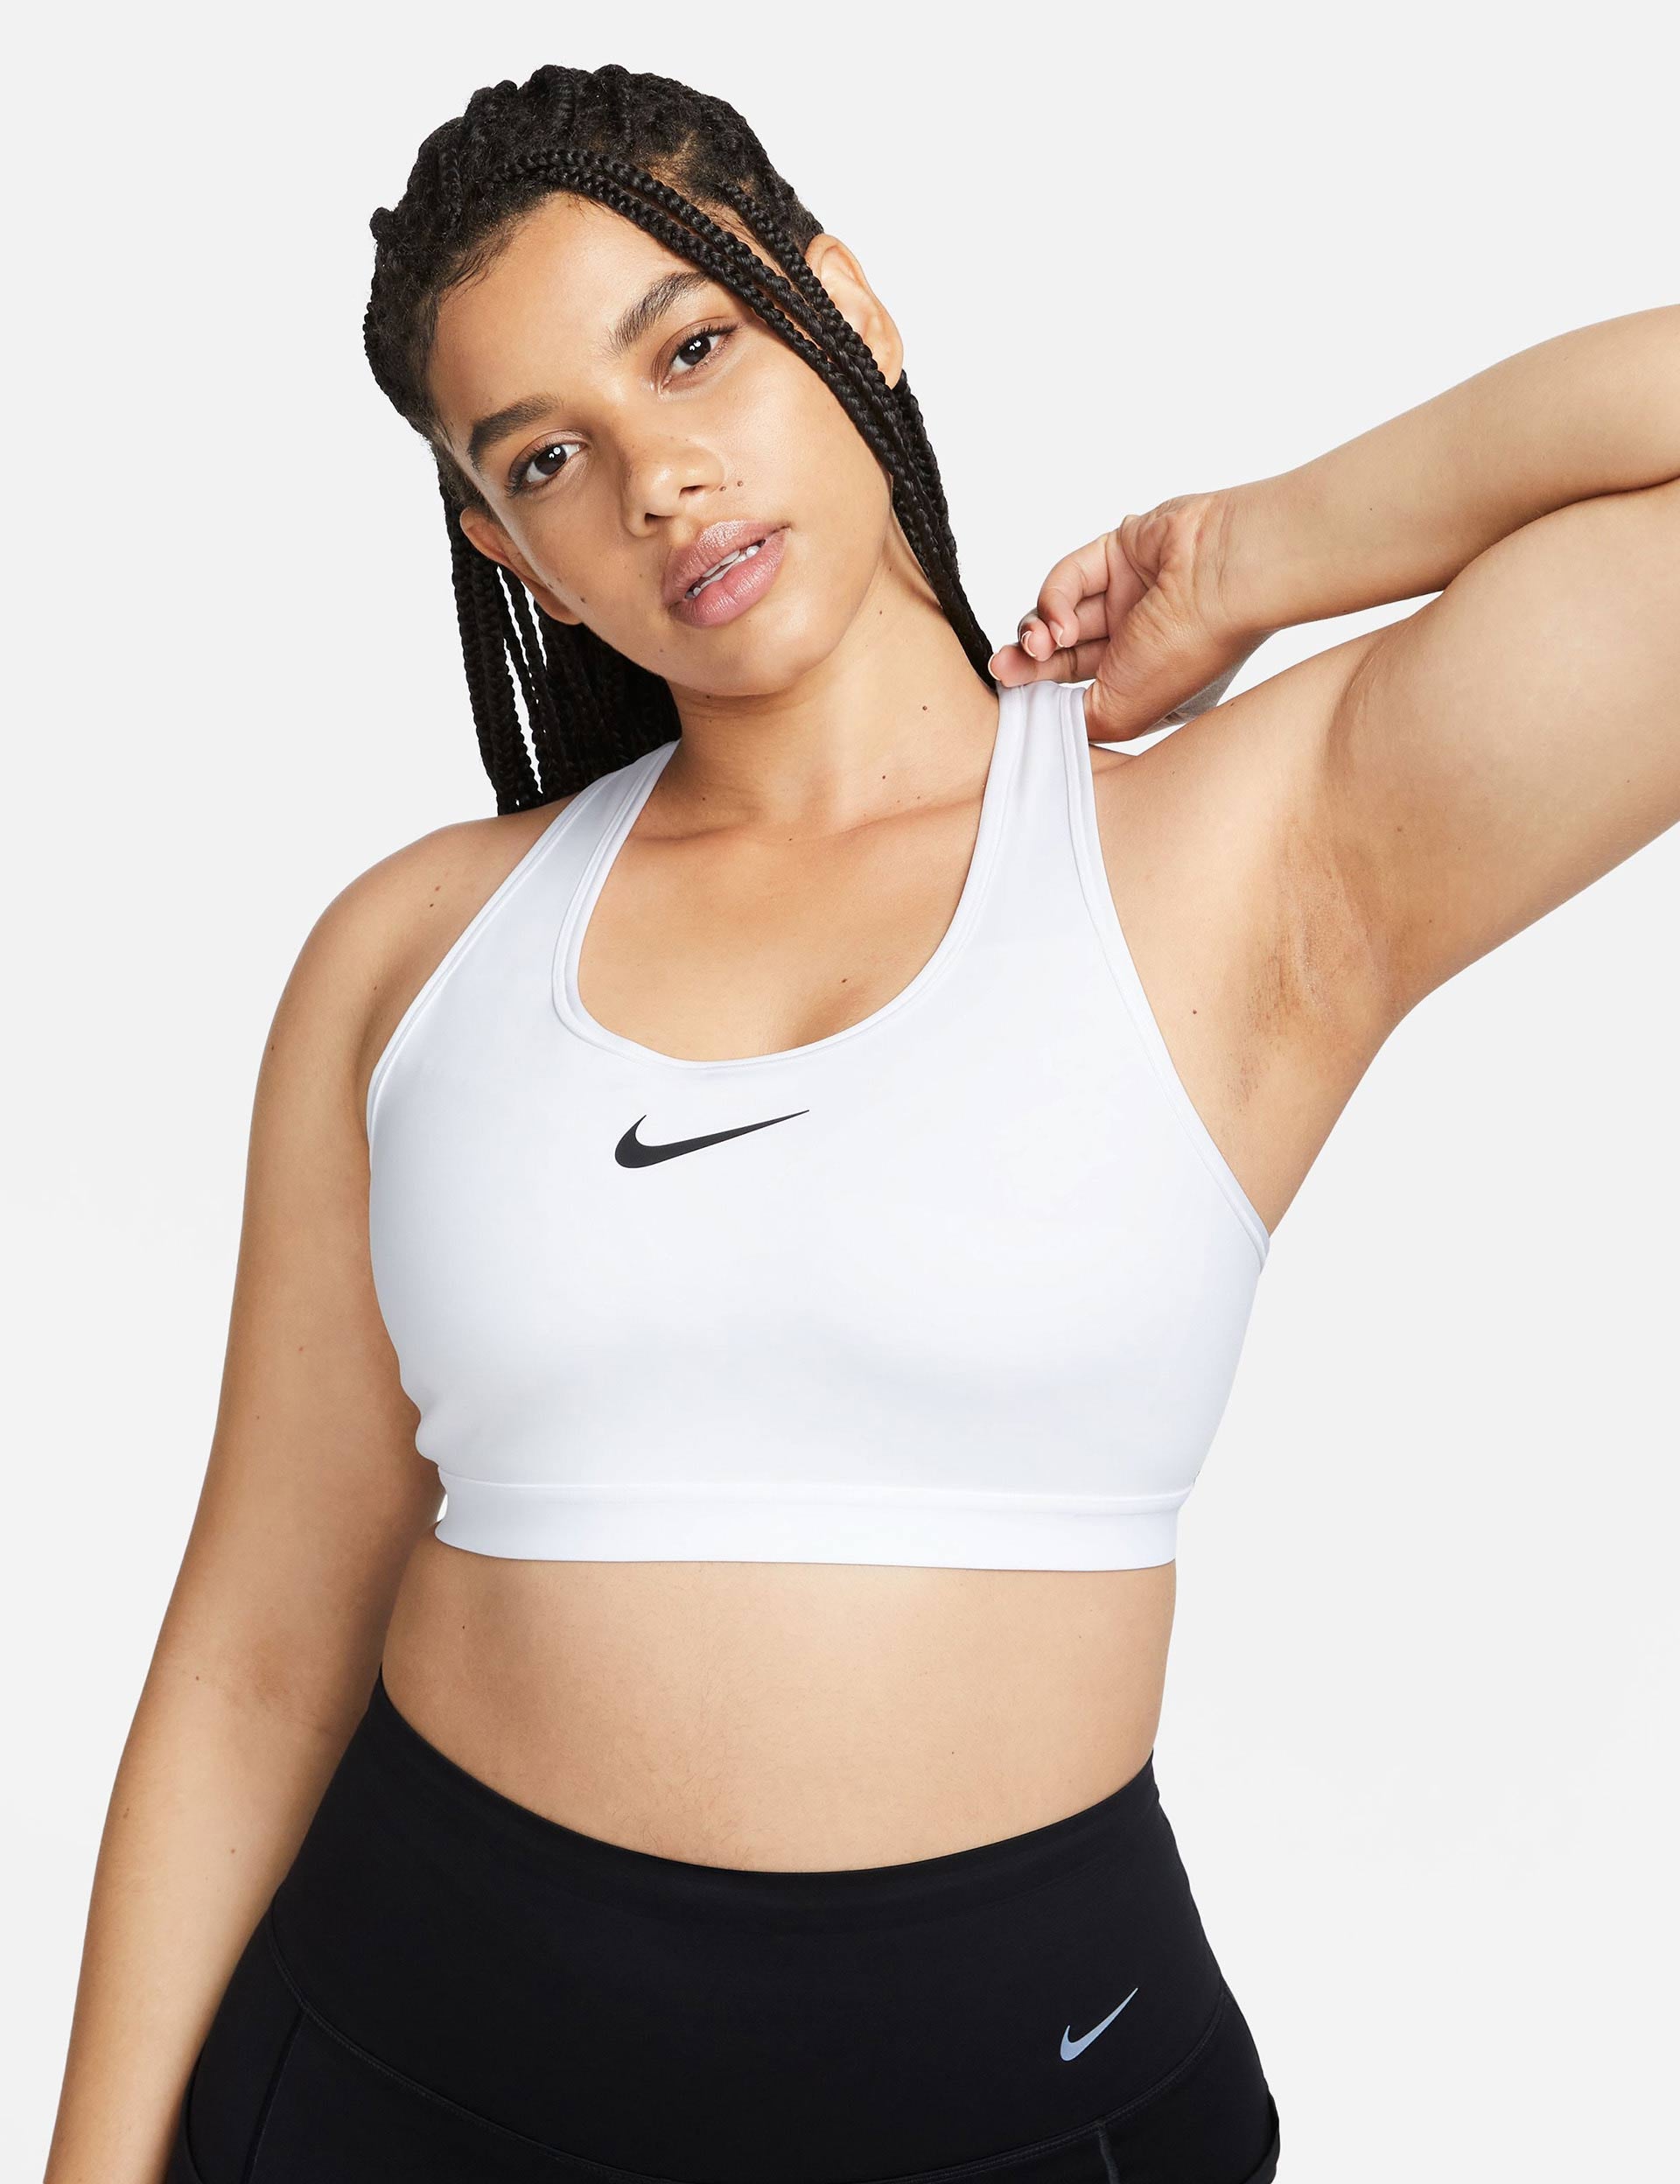 Buy Nike Plus Size Sports Bras Women White, Black online